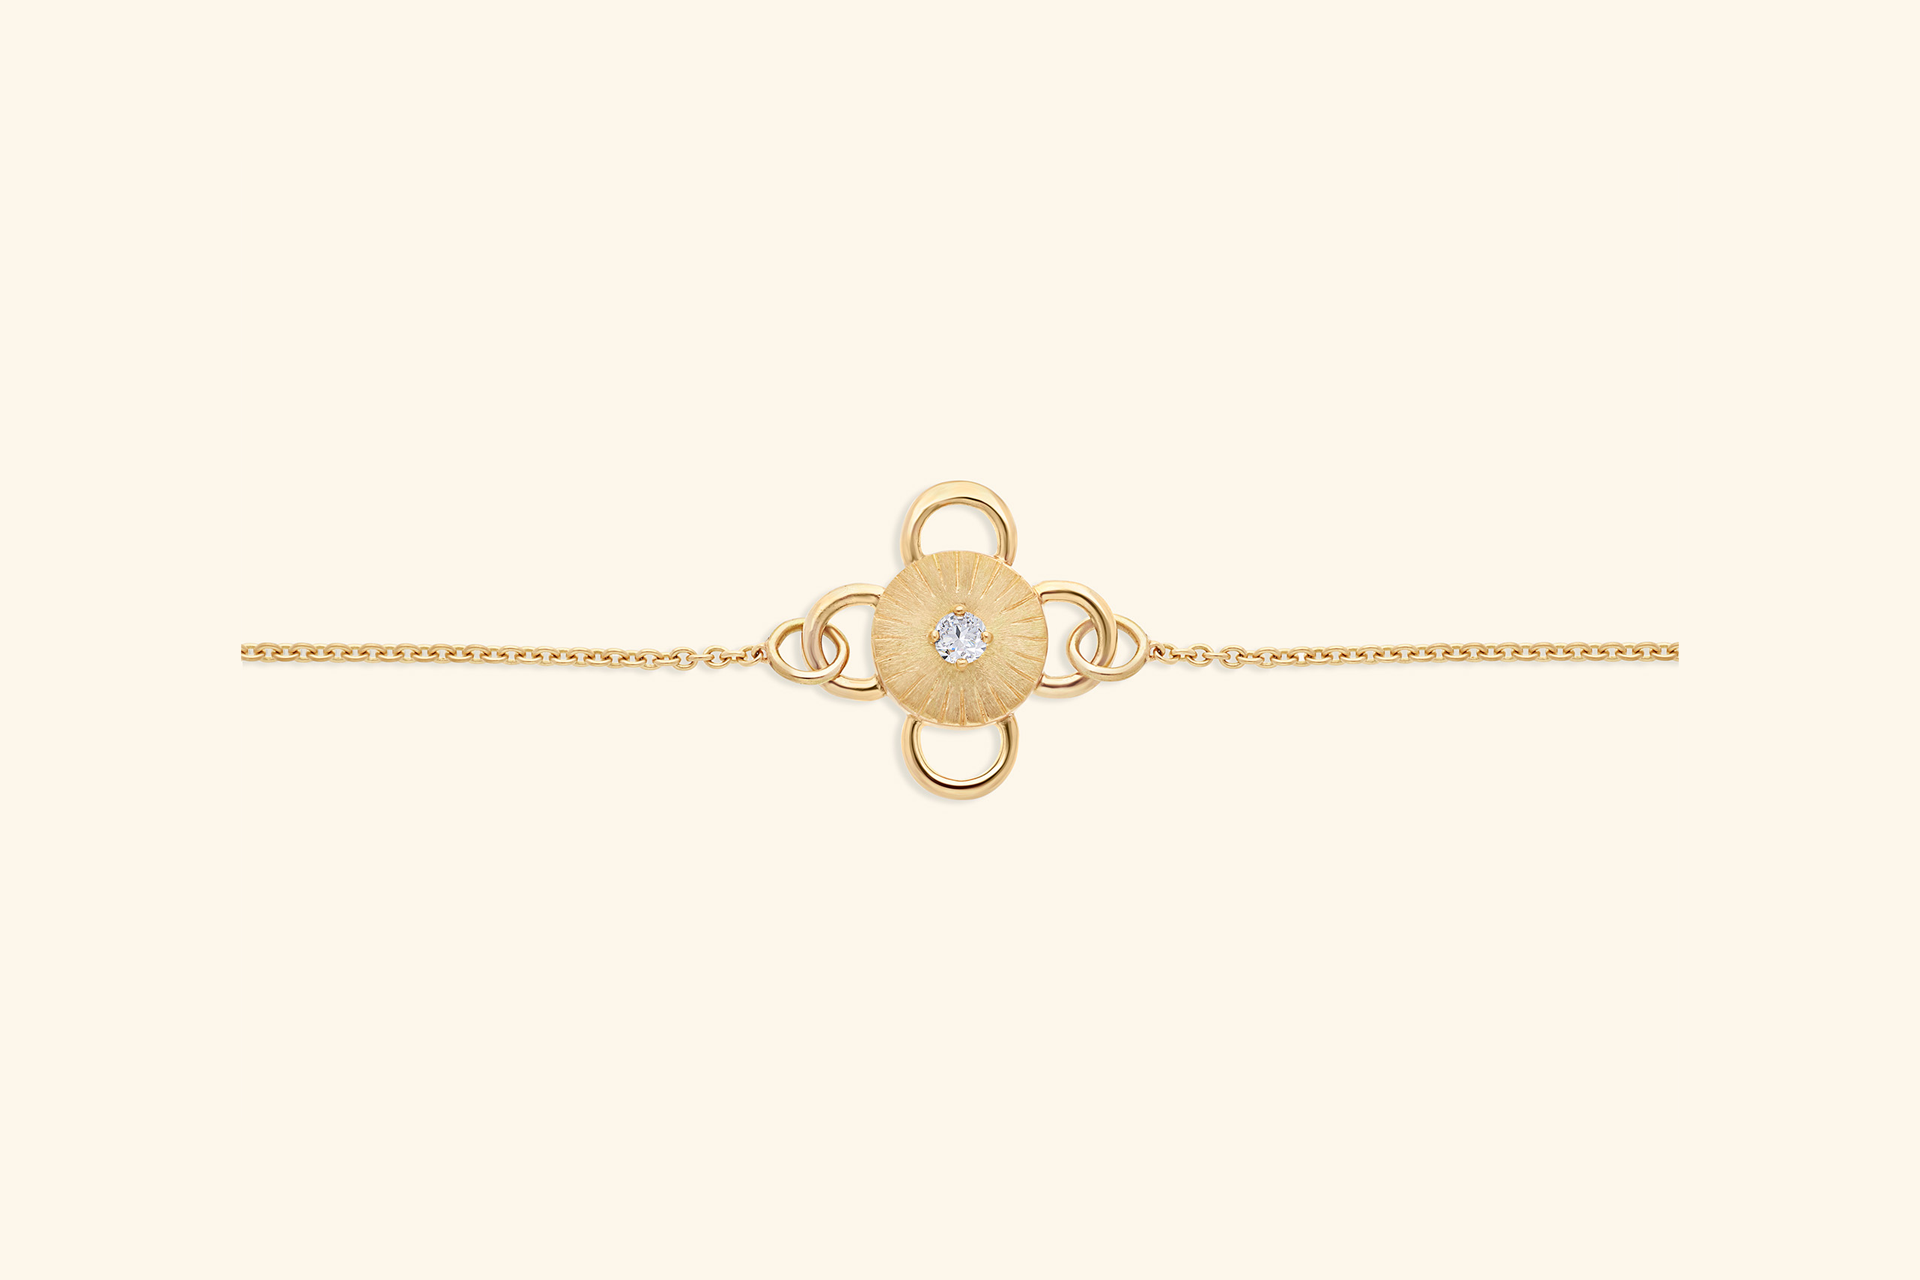 Baby Bolt bracelet, gold jewelry, set with a round brilliant diamond